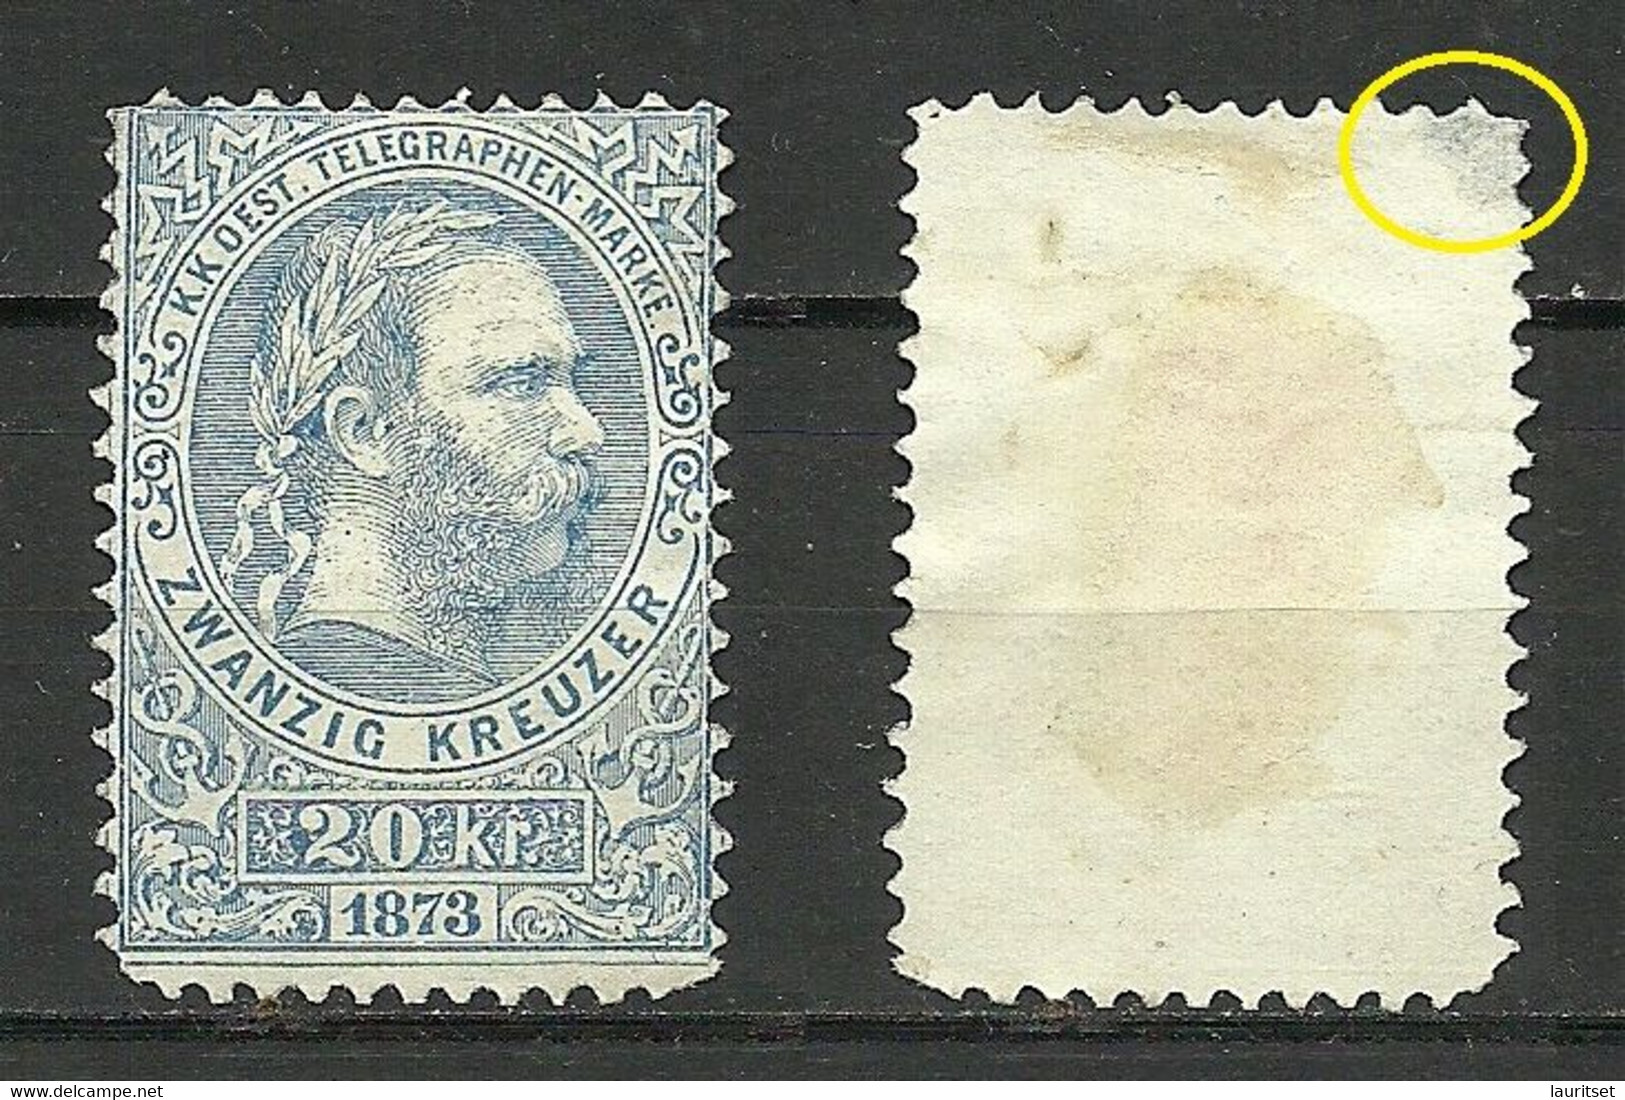 Österreich Austria 1873 Keiser Franz Joseph Telegraphenmarke 20 Kr. (*) Telegraph NB! Thinned Upper Corner! - Telegraaf